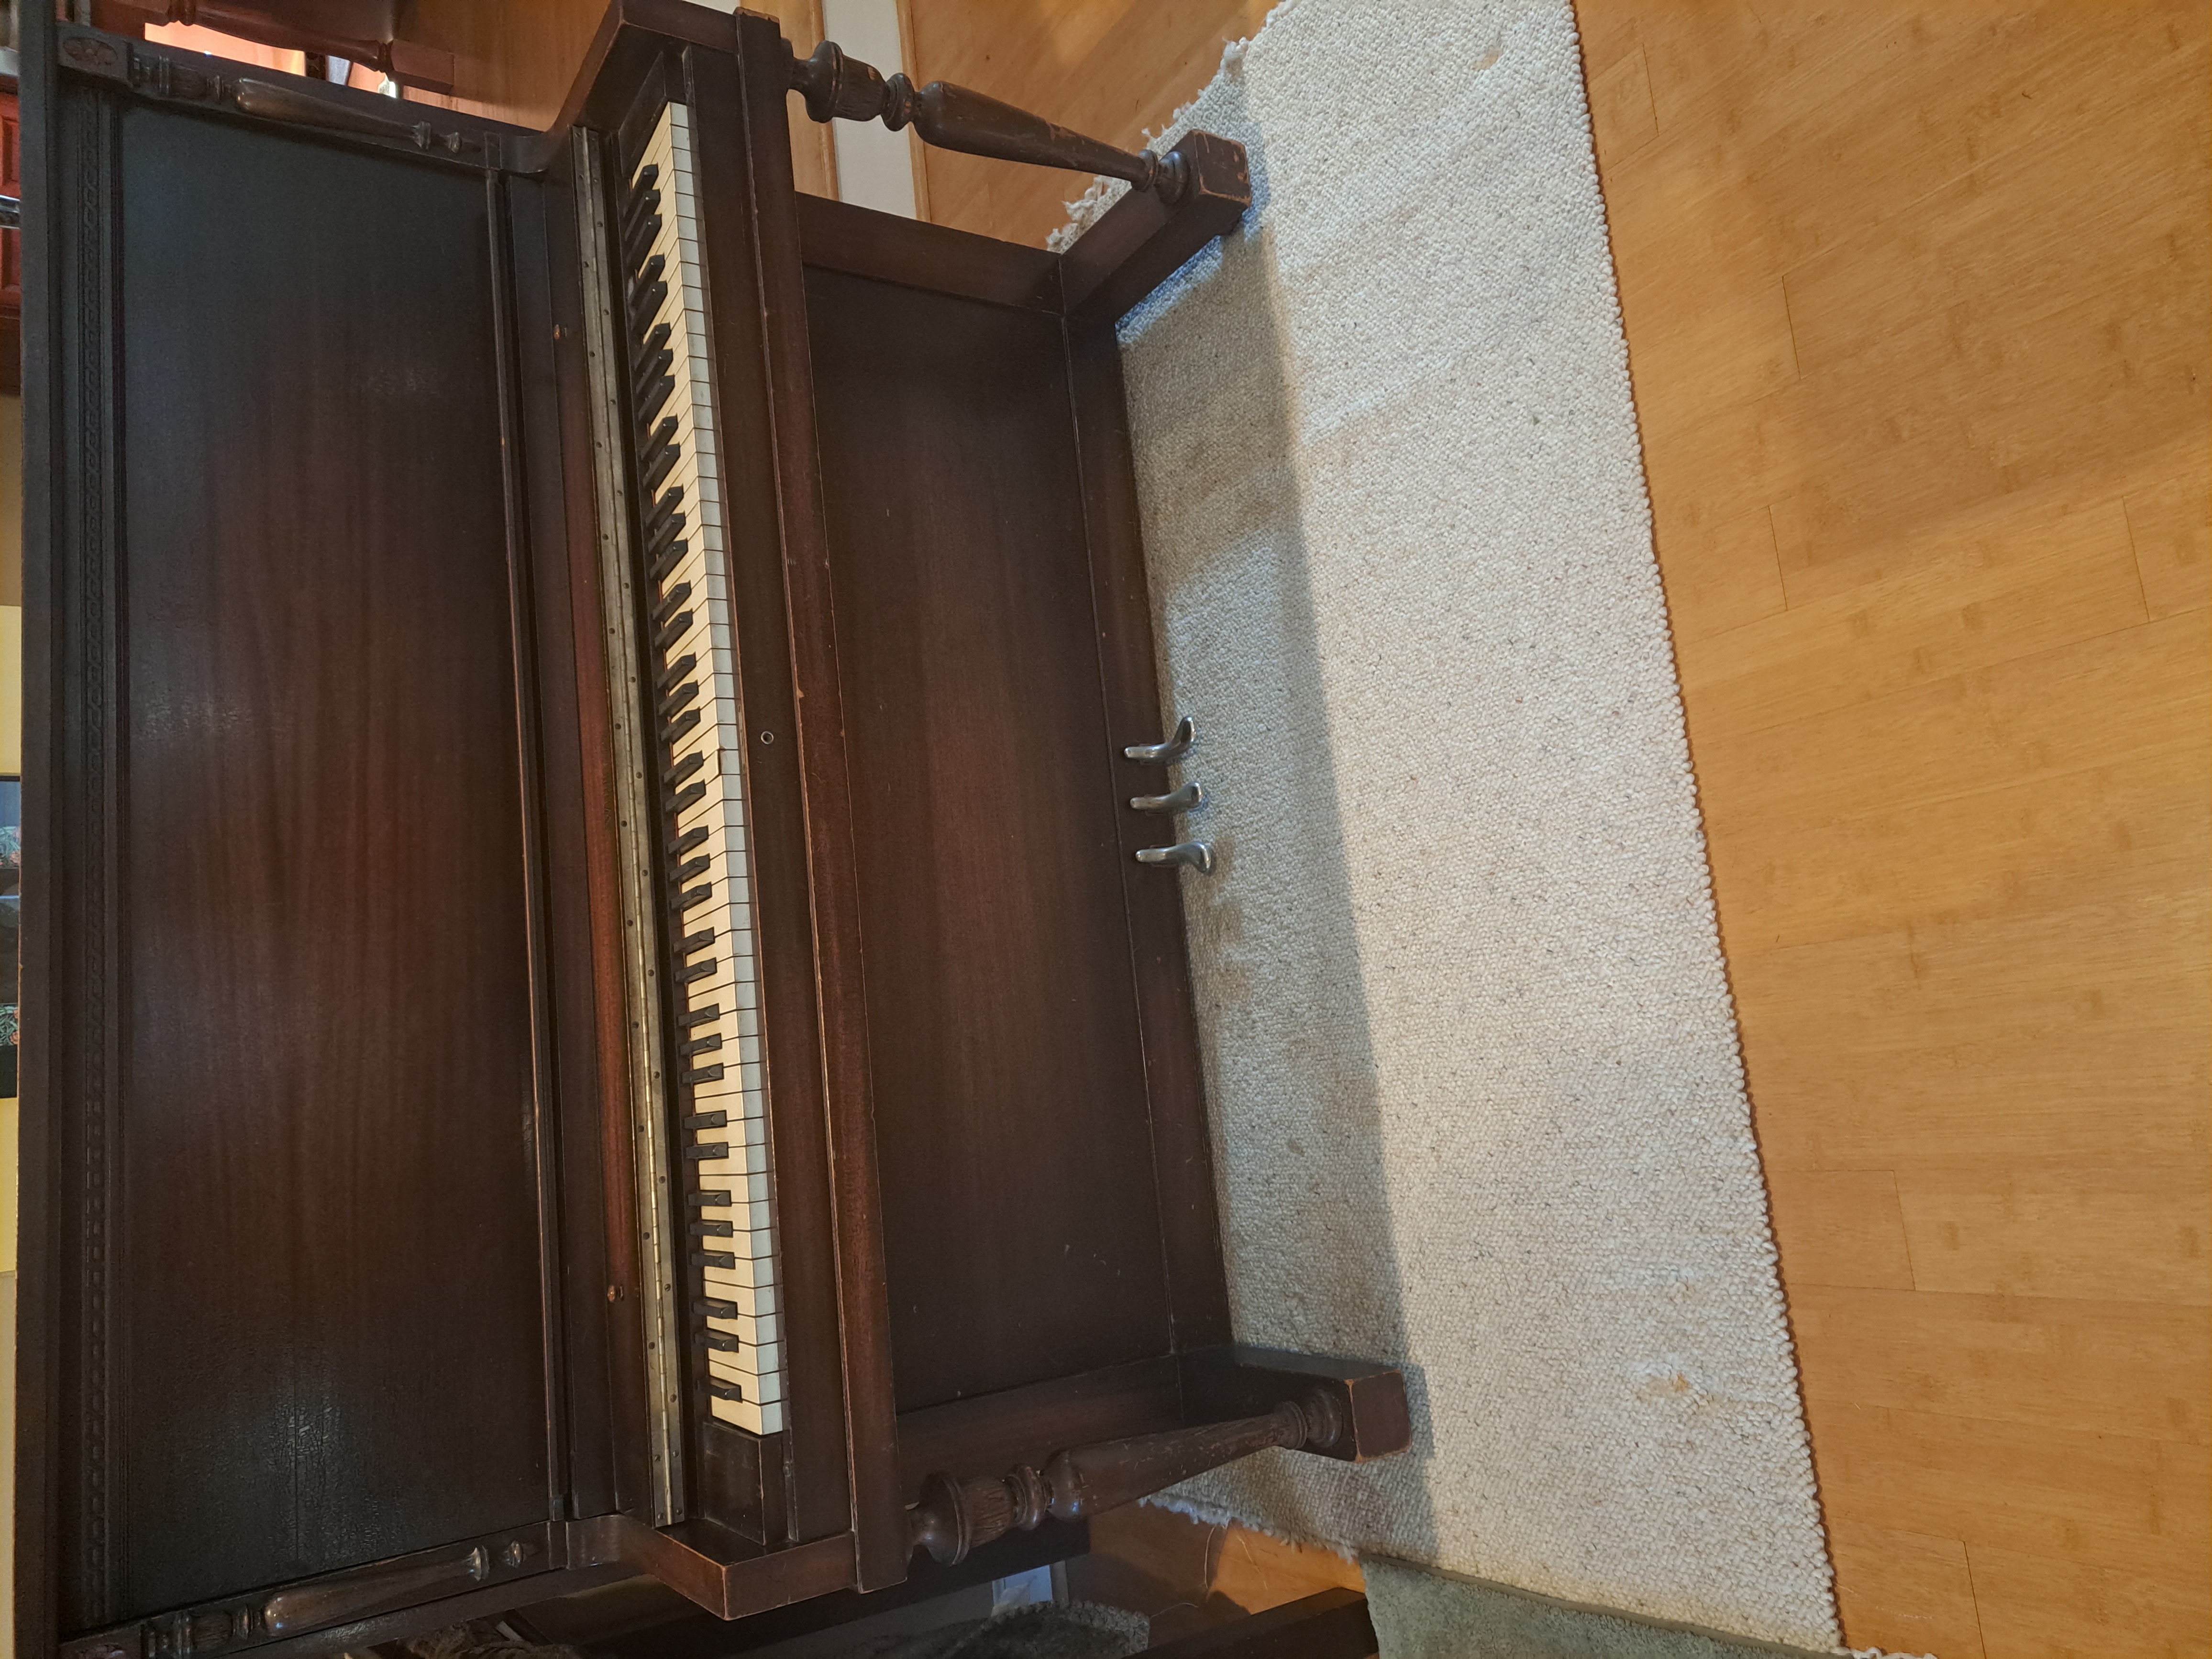 Wellington Piano